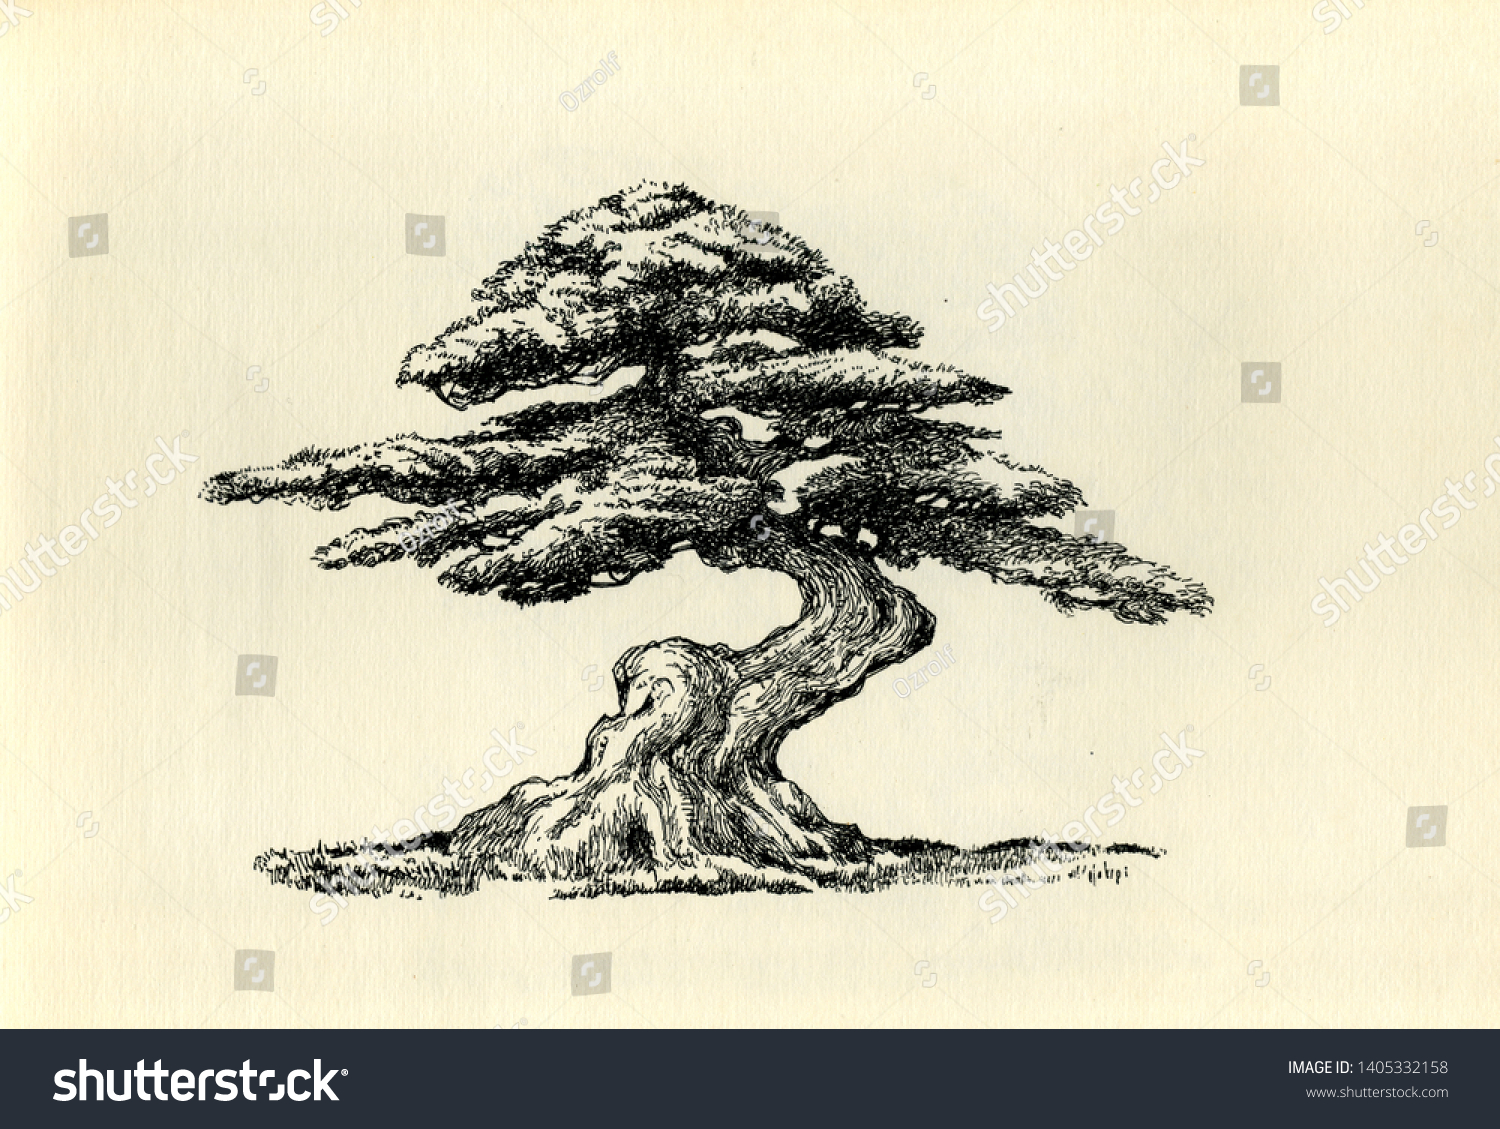 Trunks of the Trees нарисованные